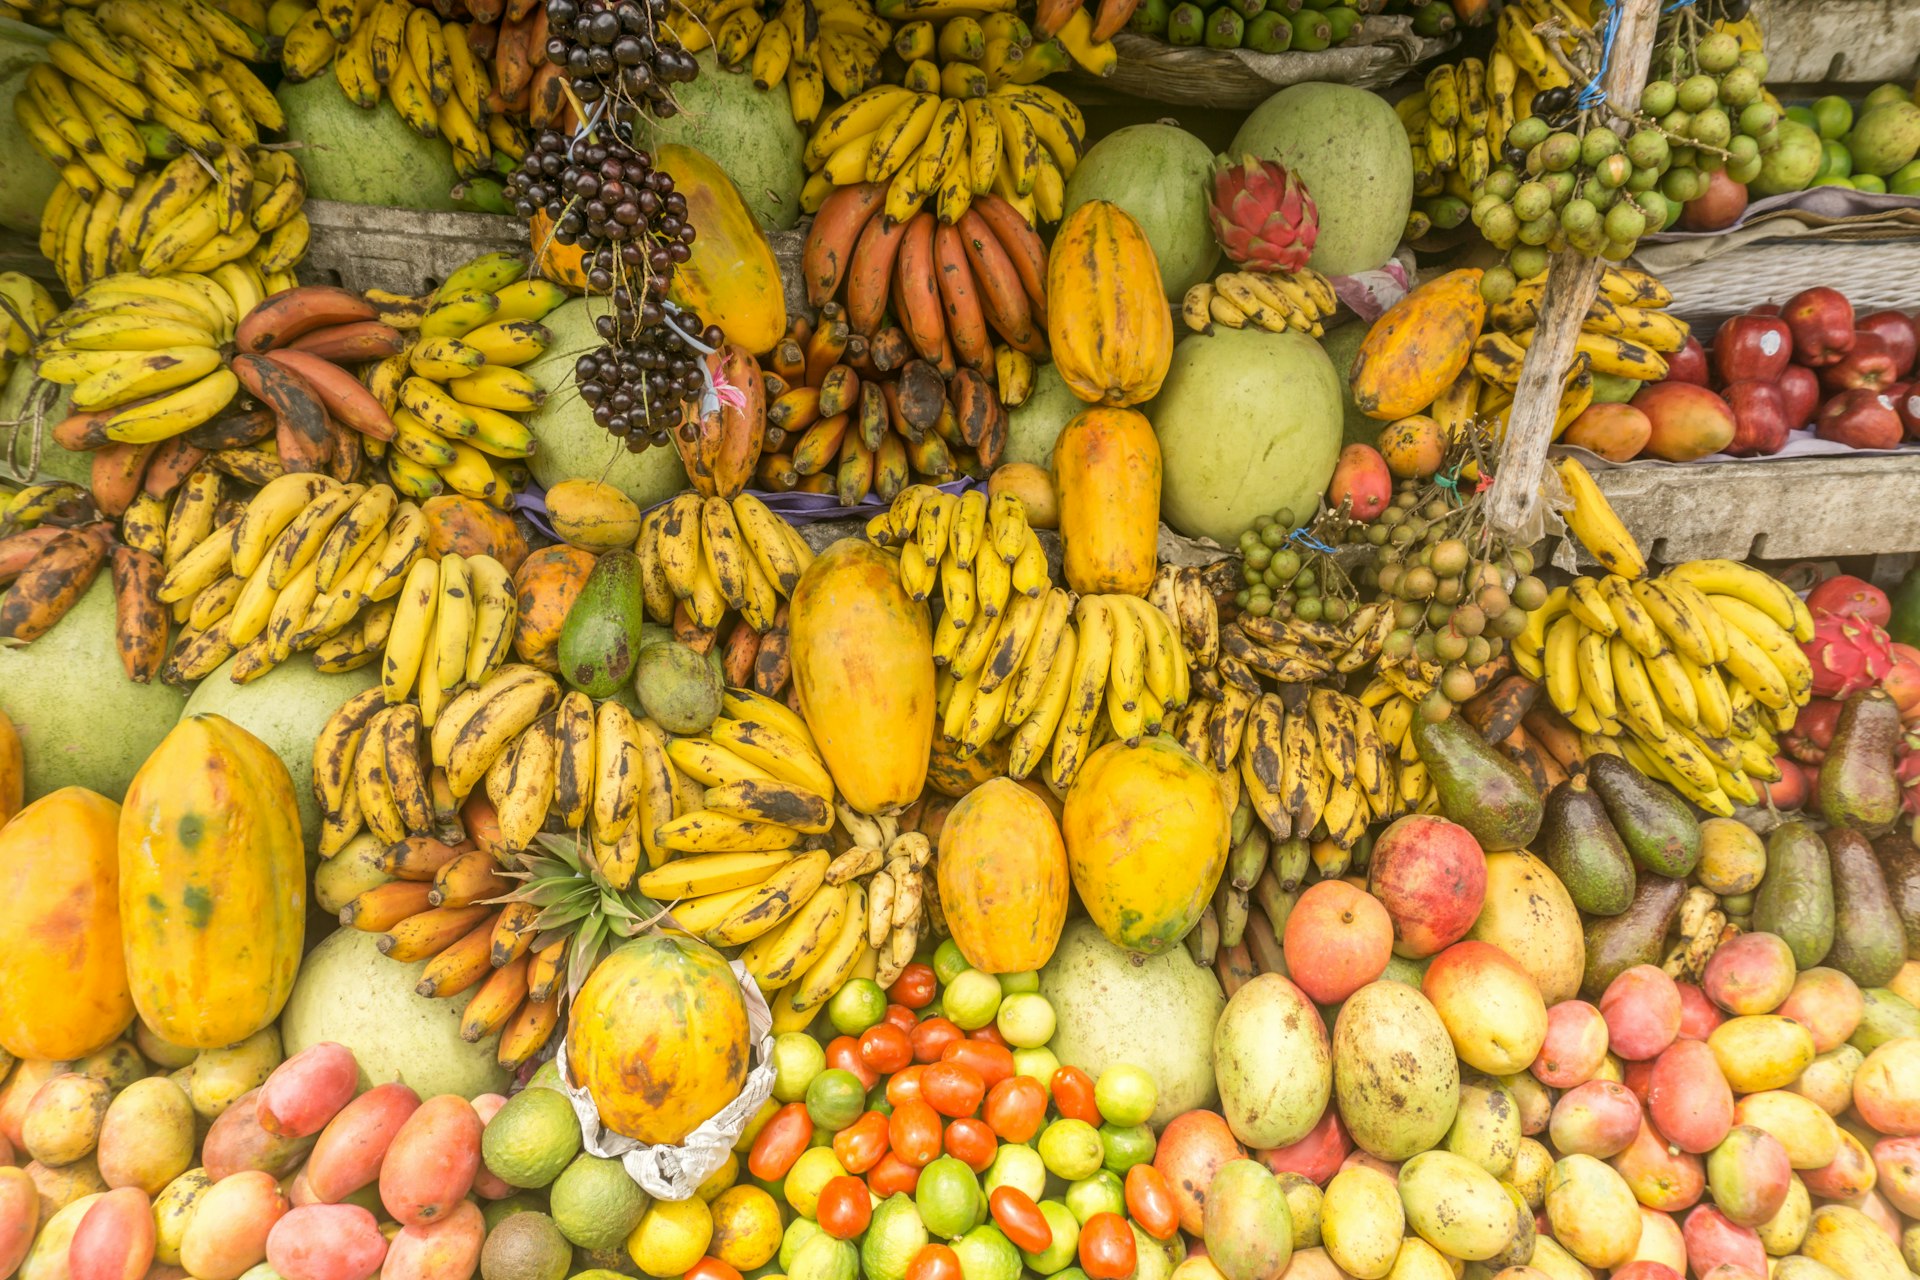 Fruits on display at a fresh food market in Honduras